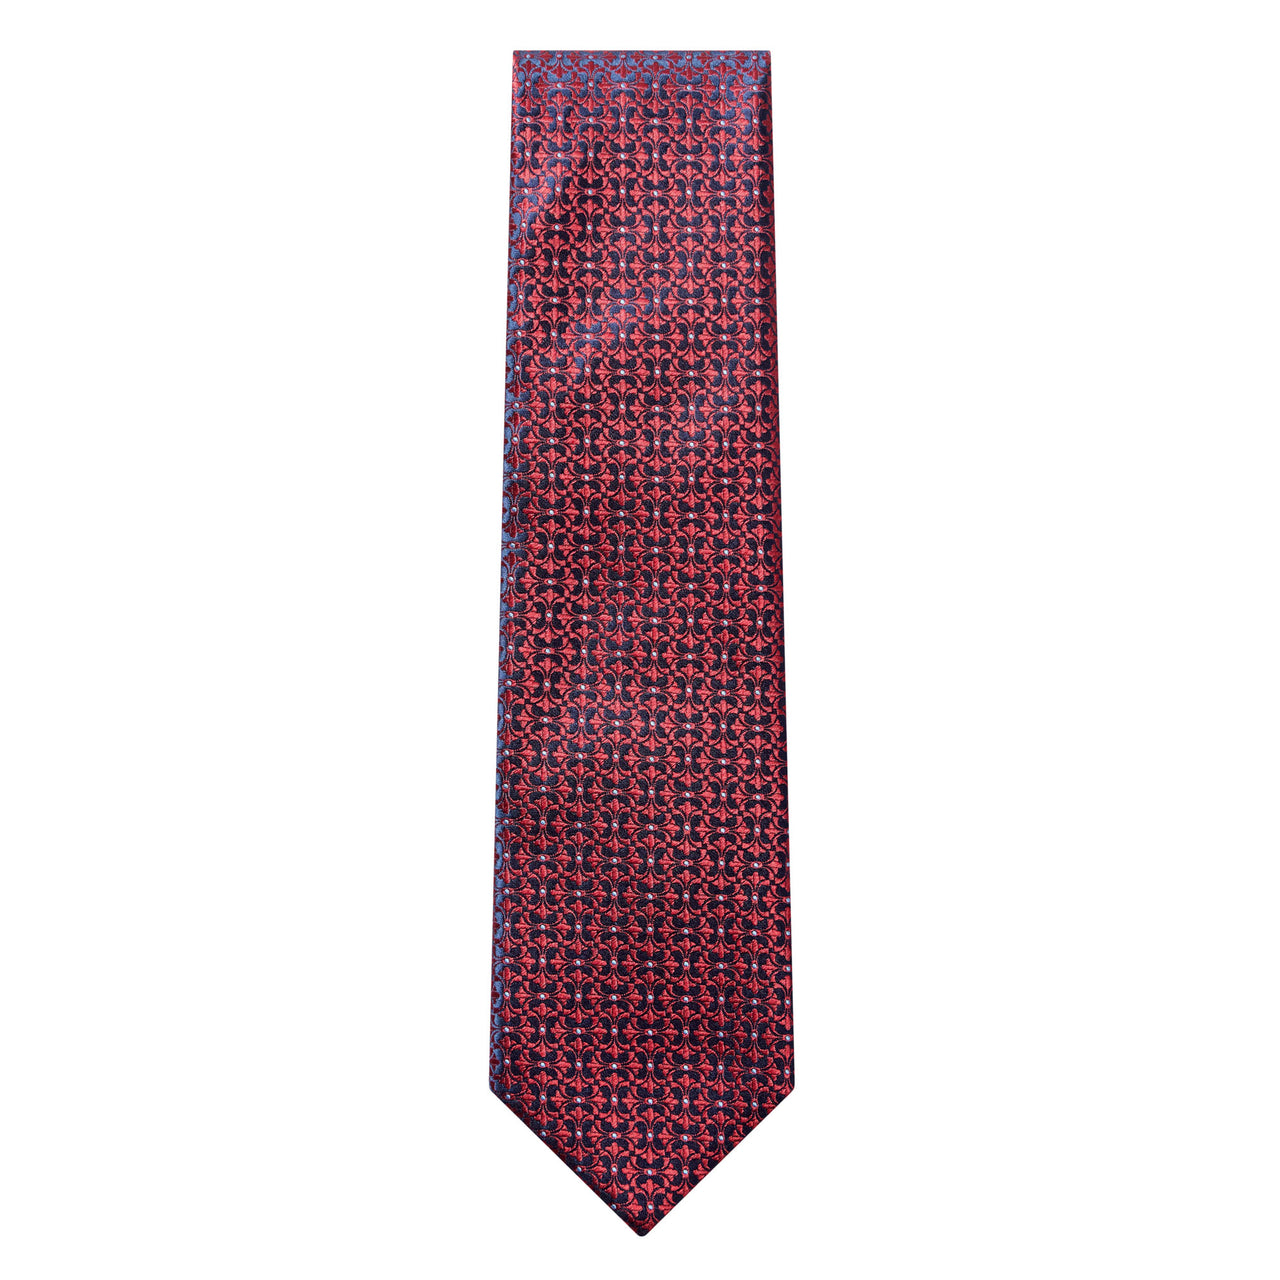 HENRY SARTORIAL X HEMLEY Printed Silk Tie NAVY/RED